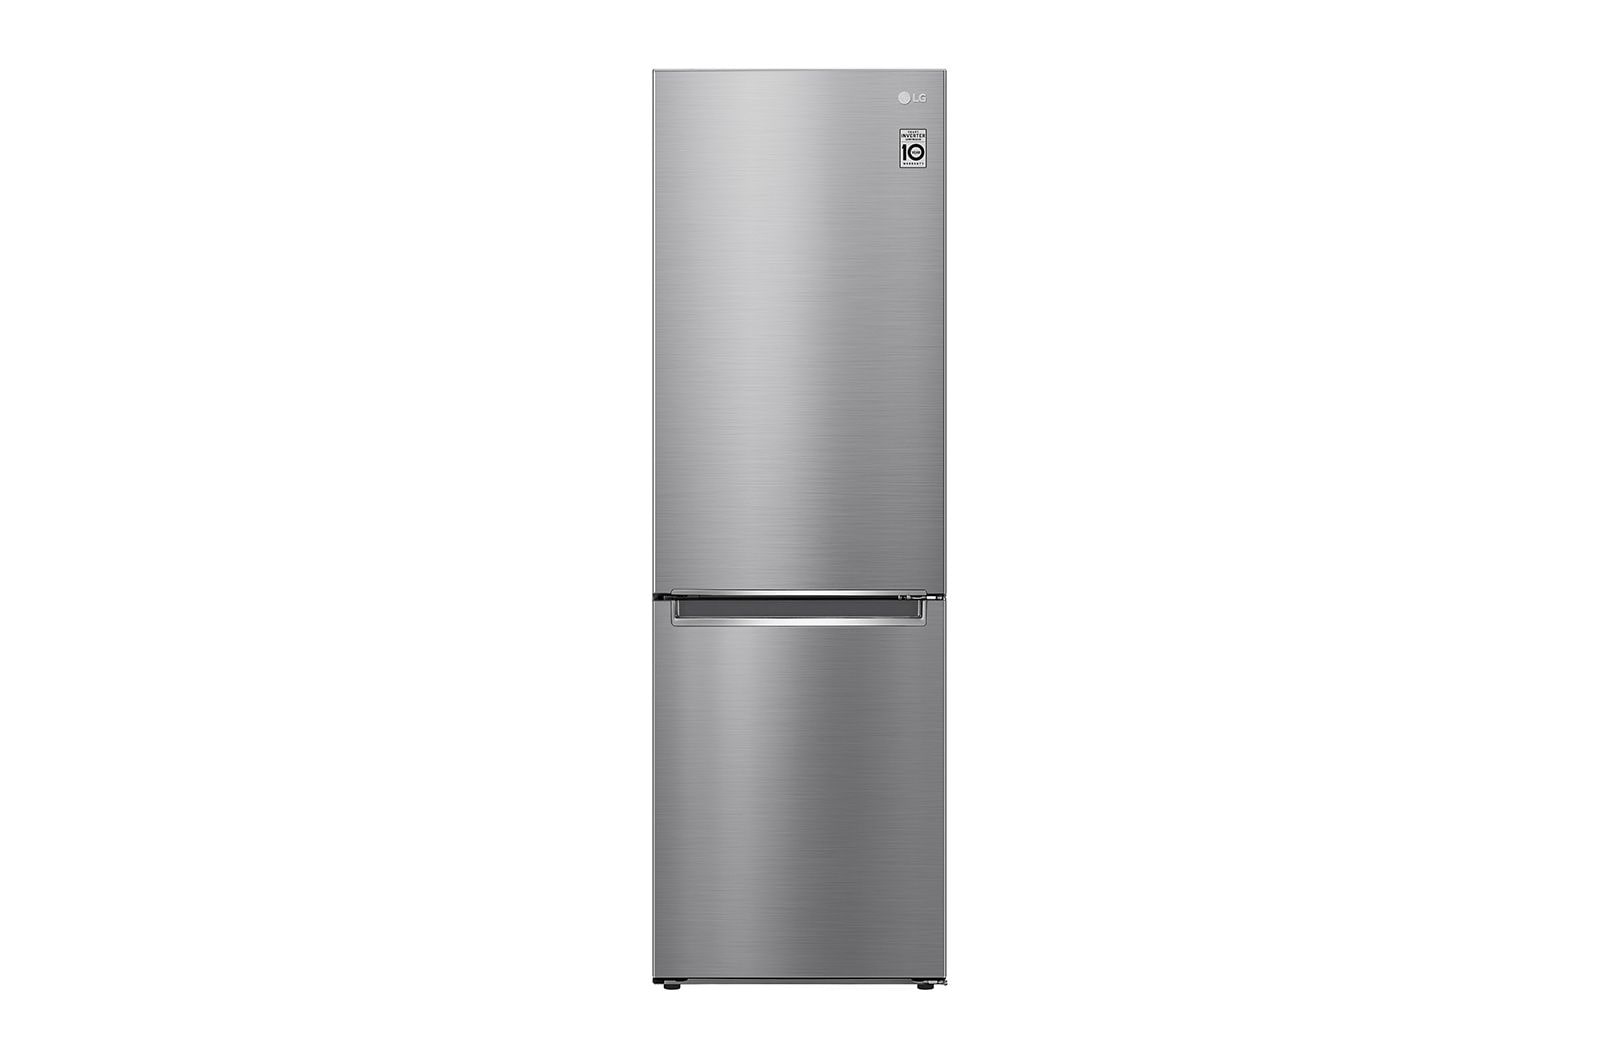 LG 341L Bottom Freezer 2 Doors Refrigerator with Smart Inverter Compressor, M341S13